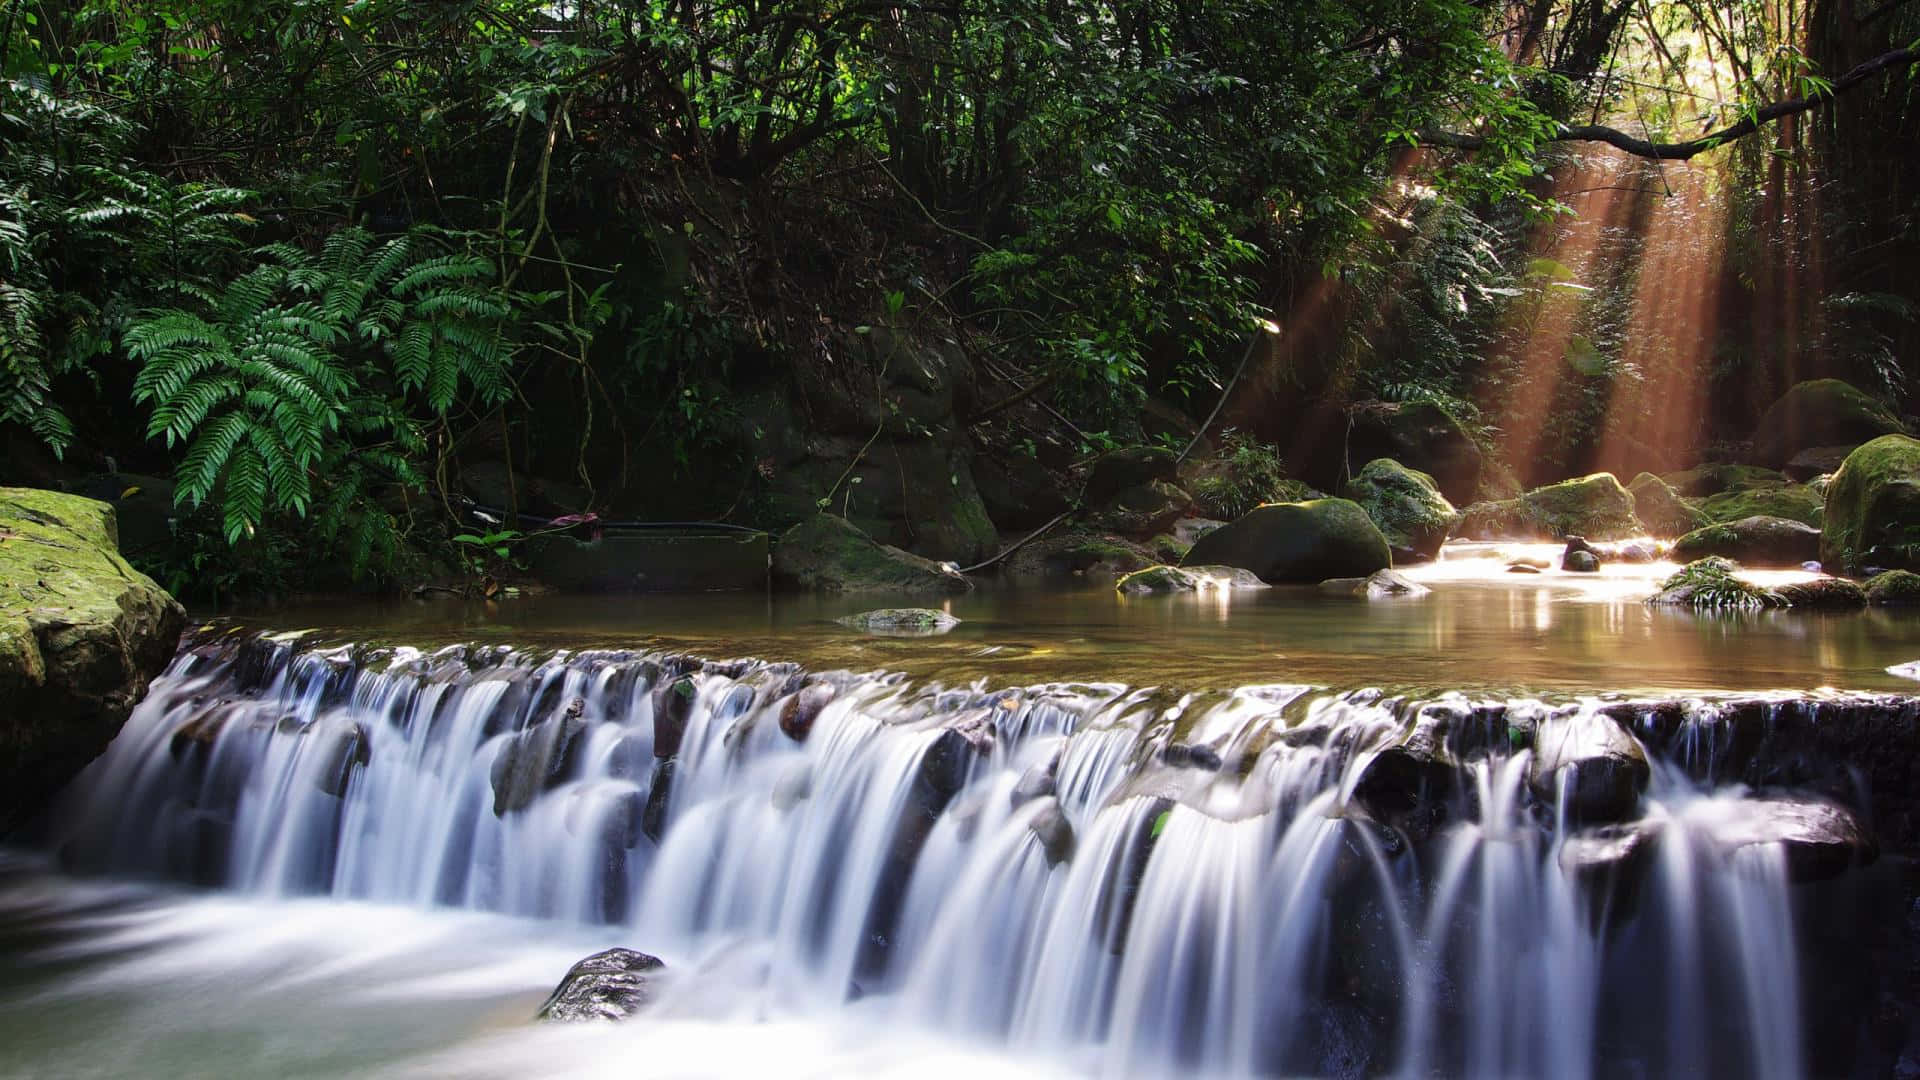 Enjoy the beauty of nature at the amazing Churun Meru Waterfall in Venezuela